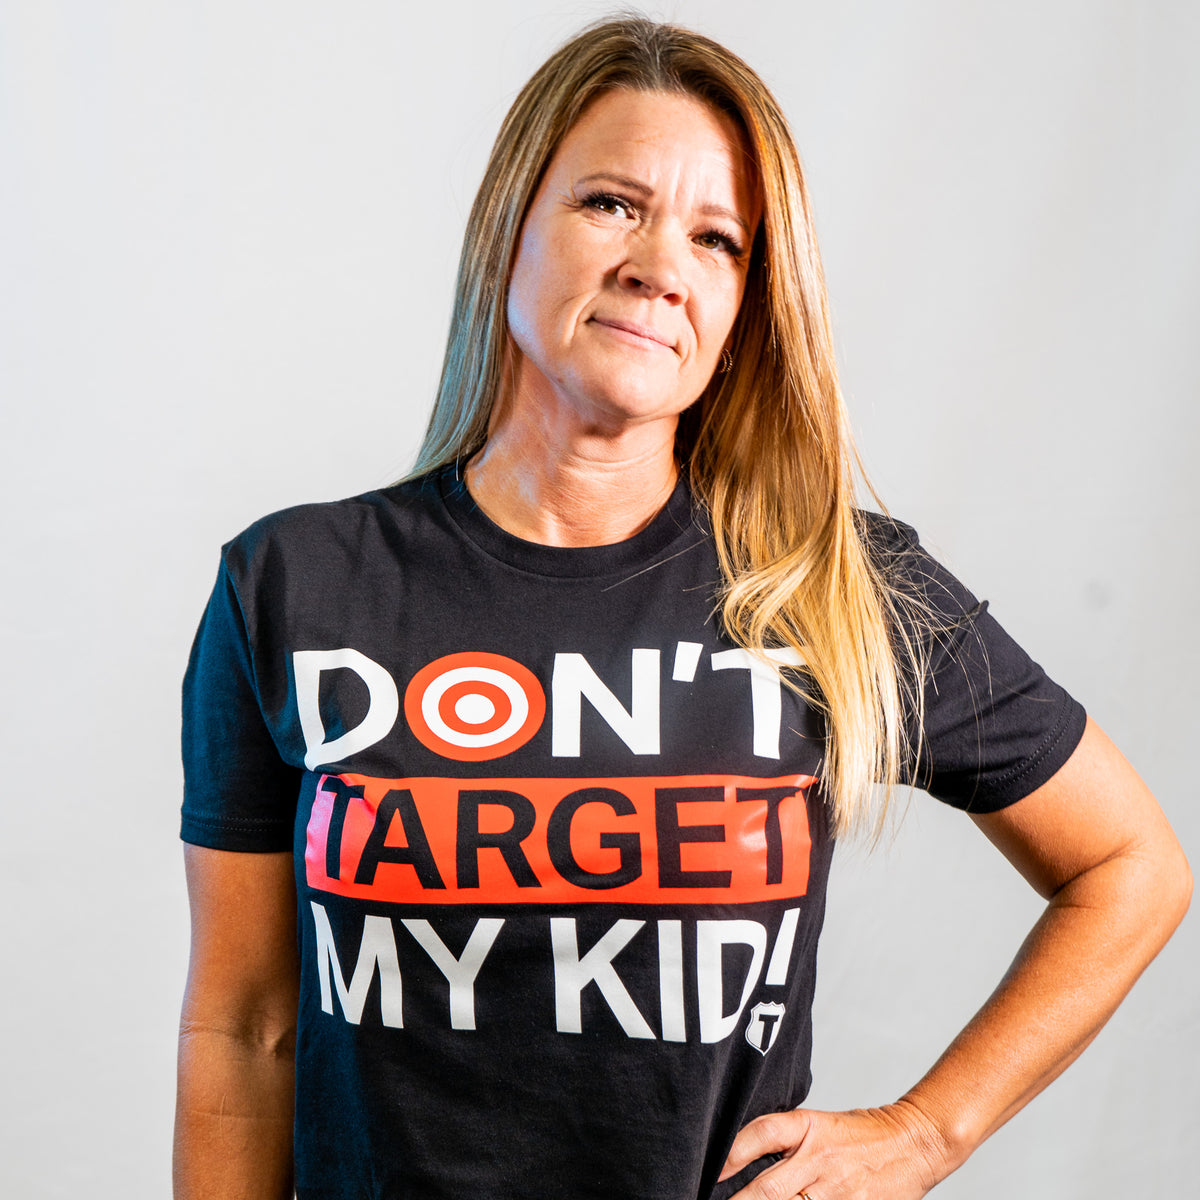 Don't Target My Kids T Shirt - Limotees